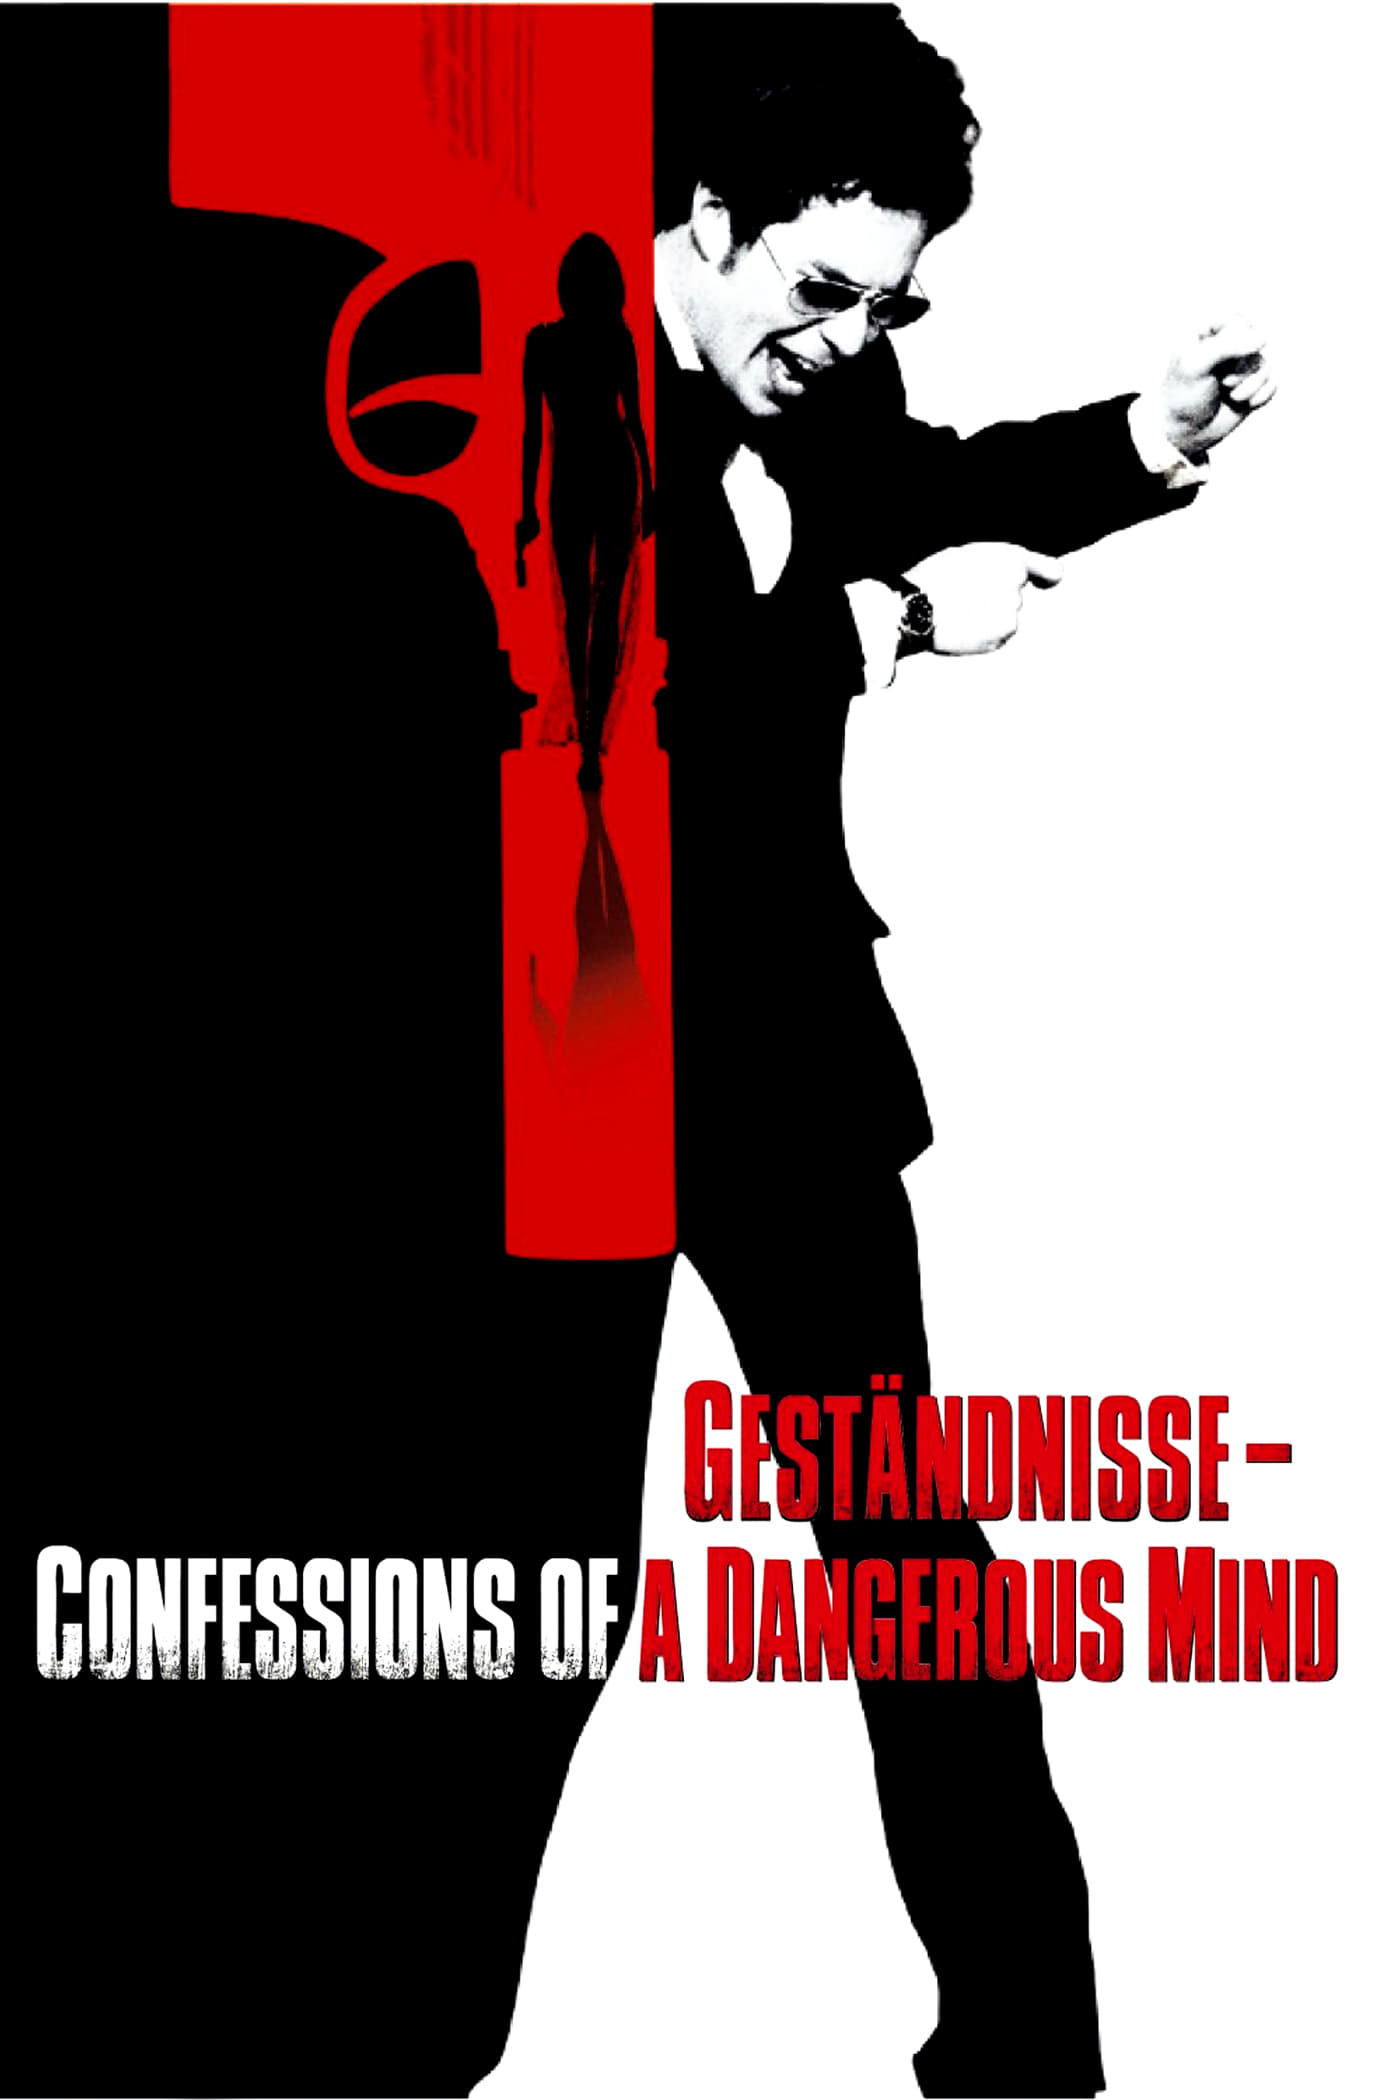 Plakat von "Geständnisse - Confessions of a Dangerous Mind"